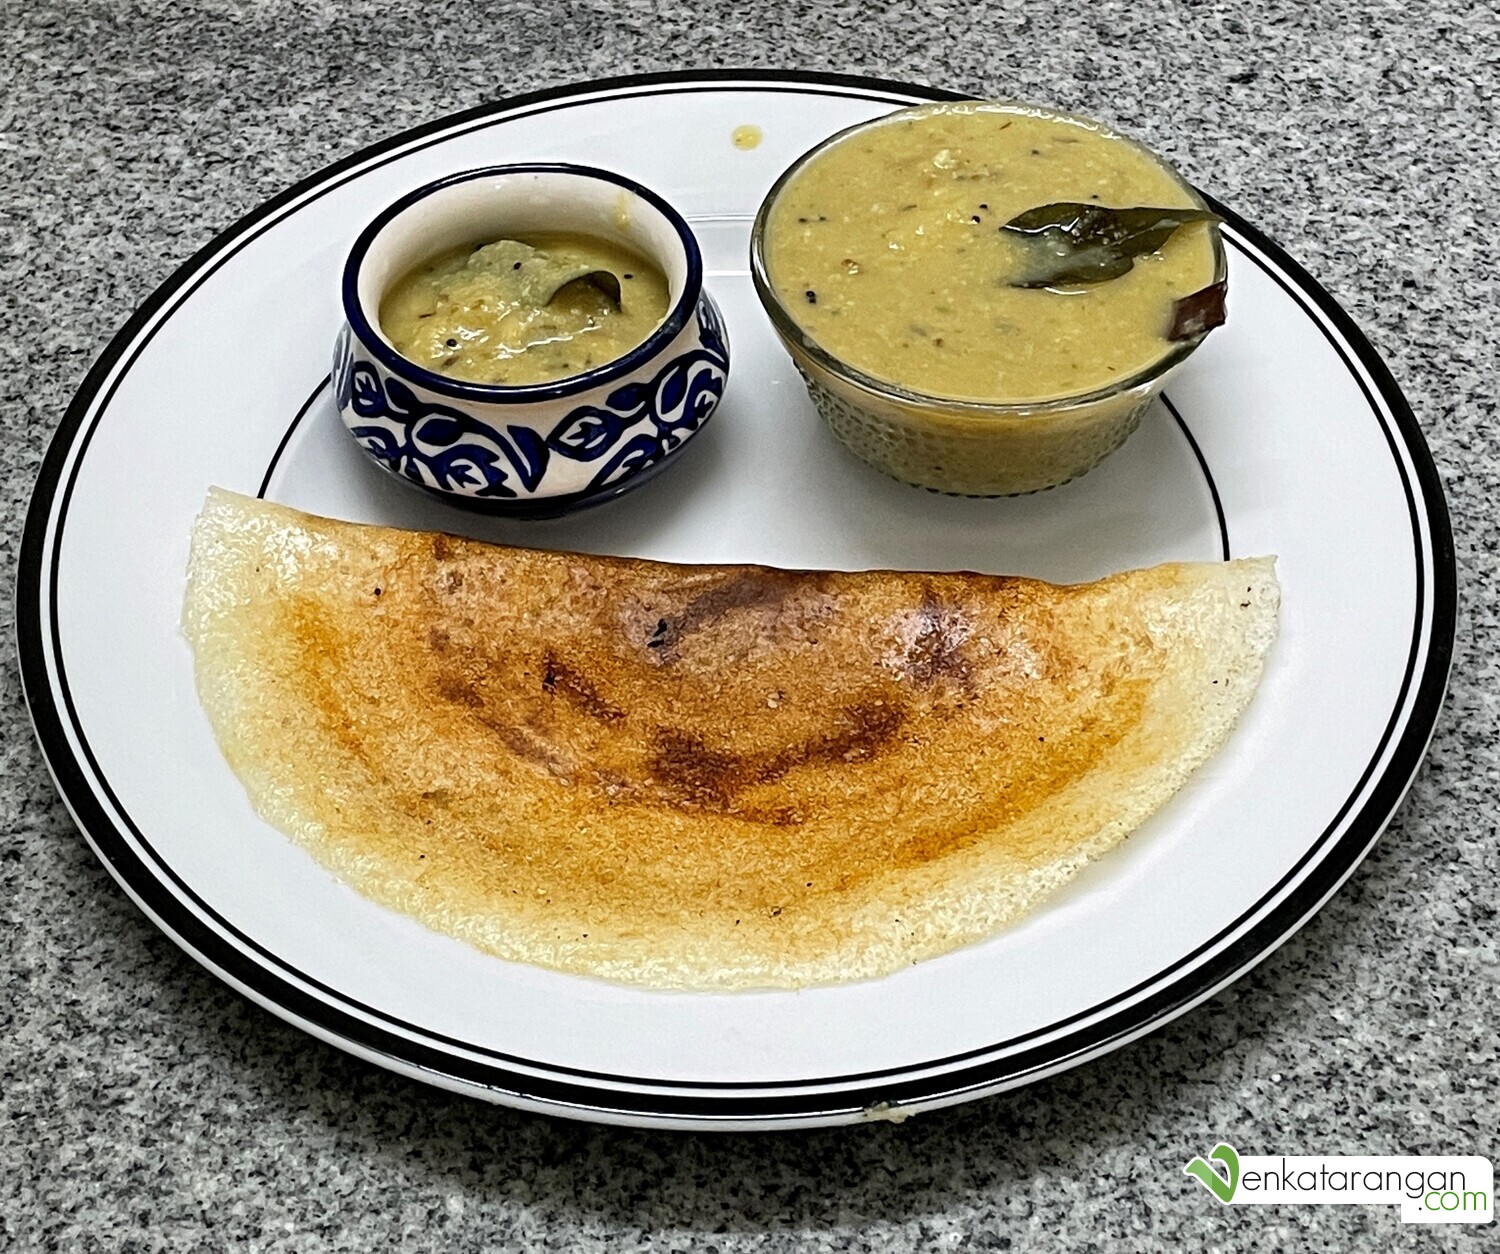 Today's home cooked breakfast - Crisp Dosa with Kumbakonam Kadappa Chutney. Yummy!